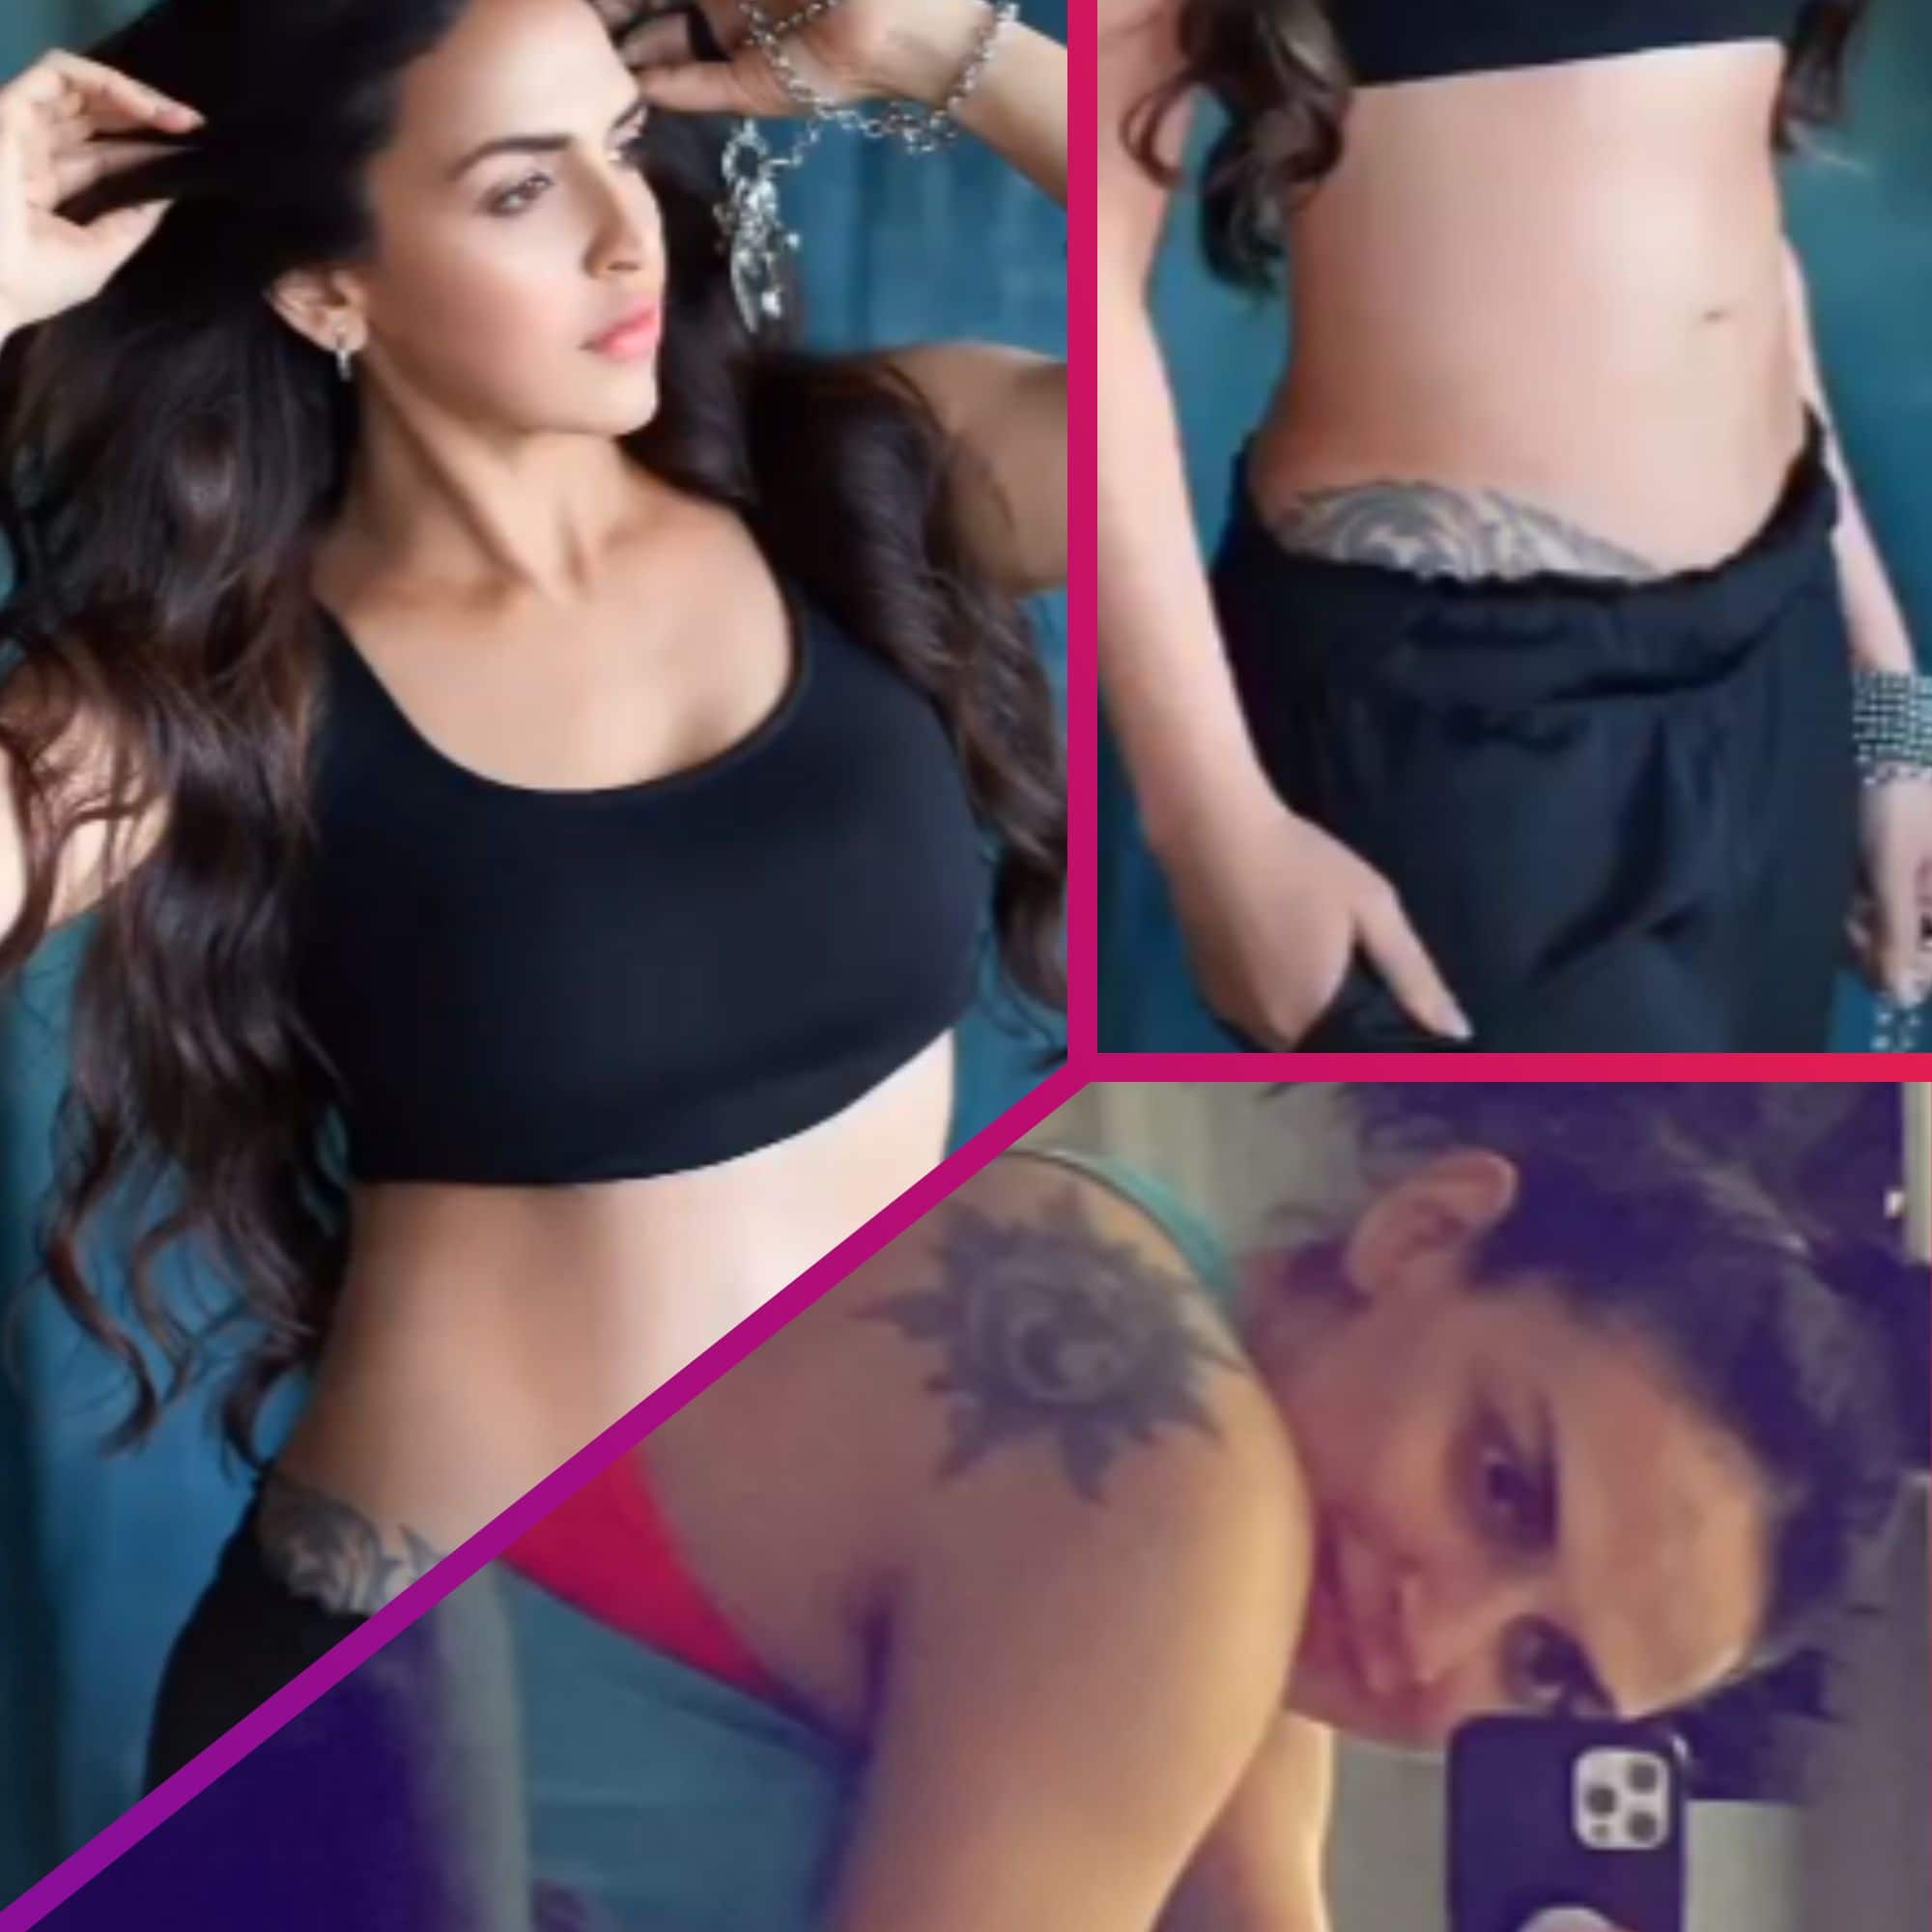 Esha Gupta hot photos gone viral her tattoo attracting fans ak Esha Gupta  అకకడ టట వయచకనన ఈష గపత చప తపపకలకపతనన కరరళల  News18 Telugu